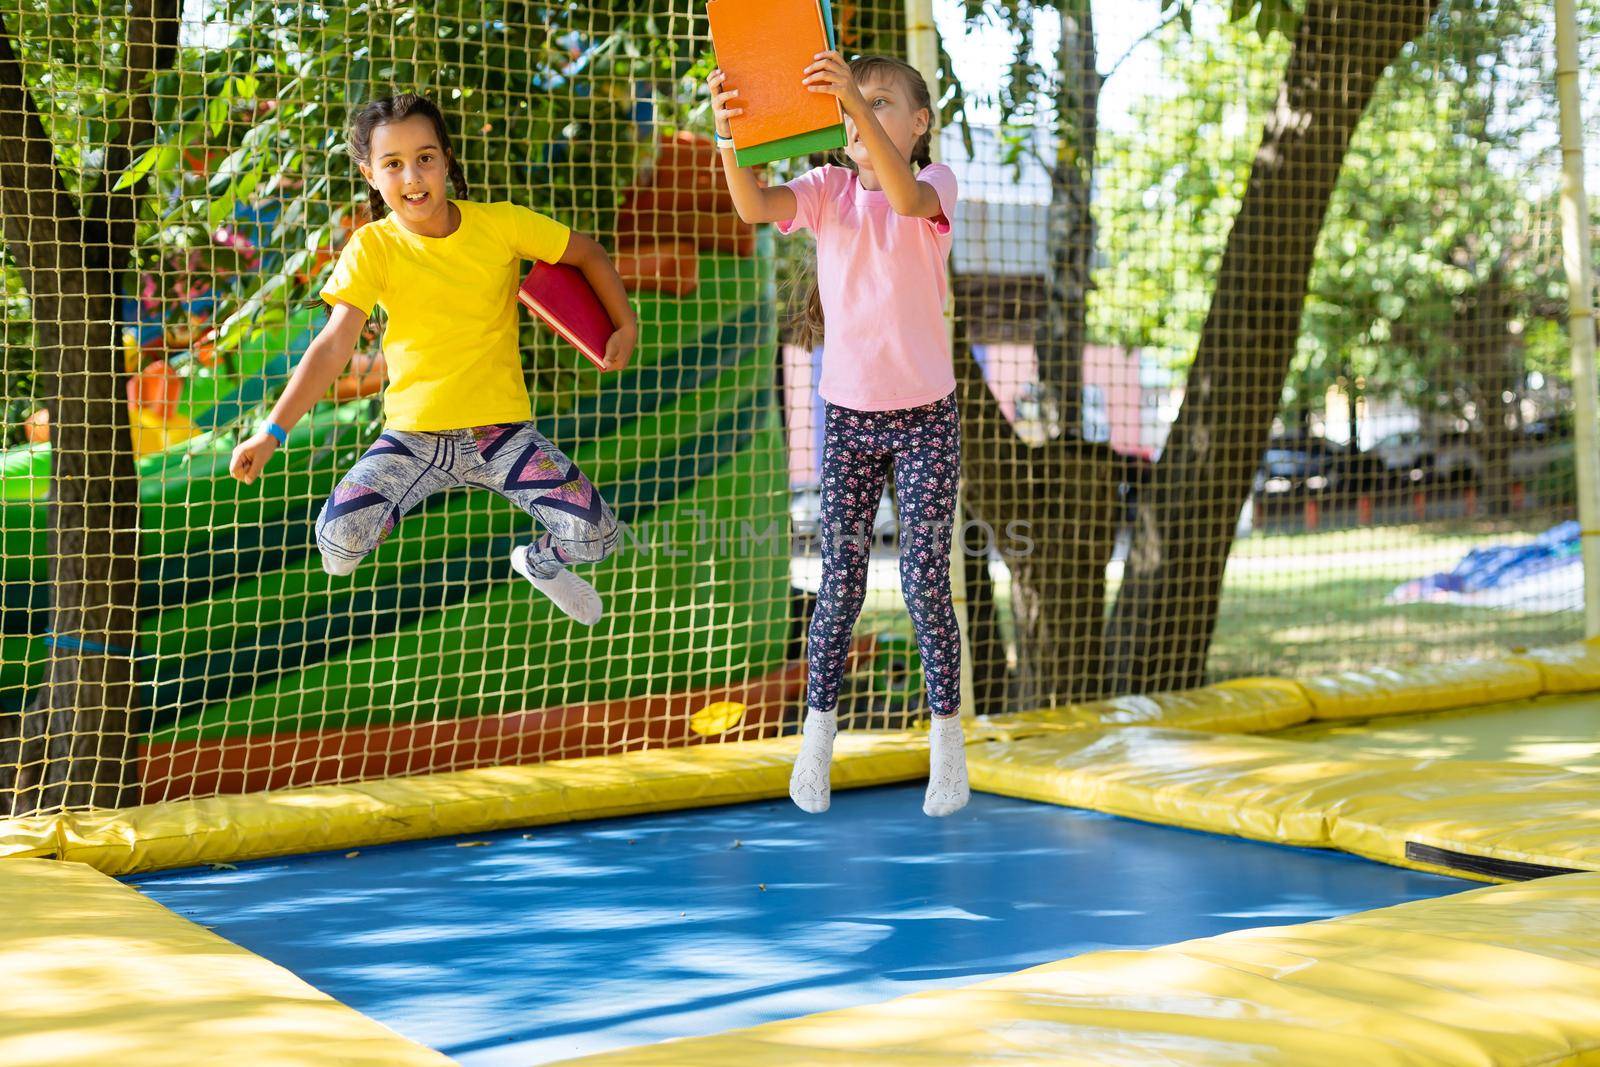 Little pretty girls having fun outdoor. Jumping on trampoline in children zone. Amusement park by Andelov13